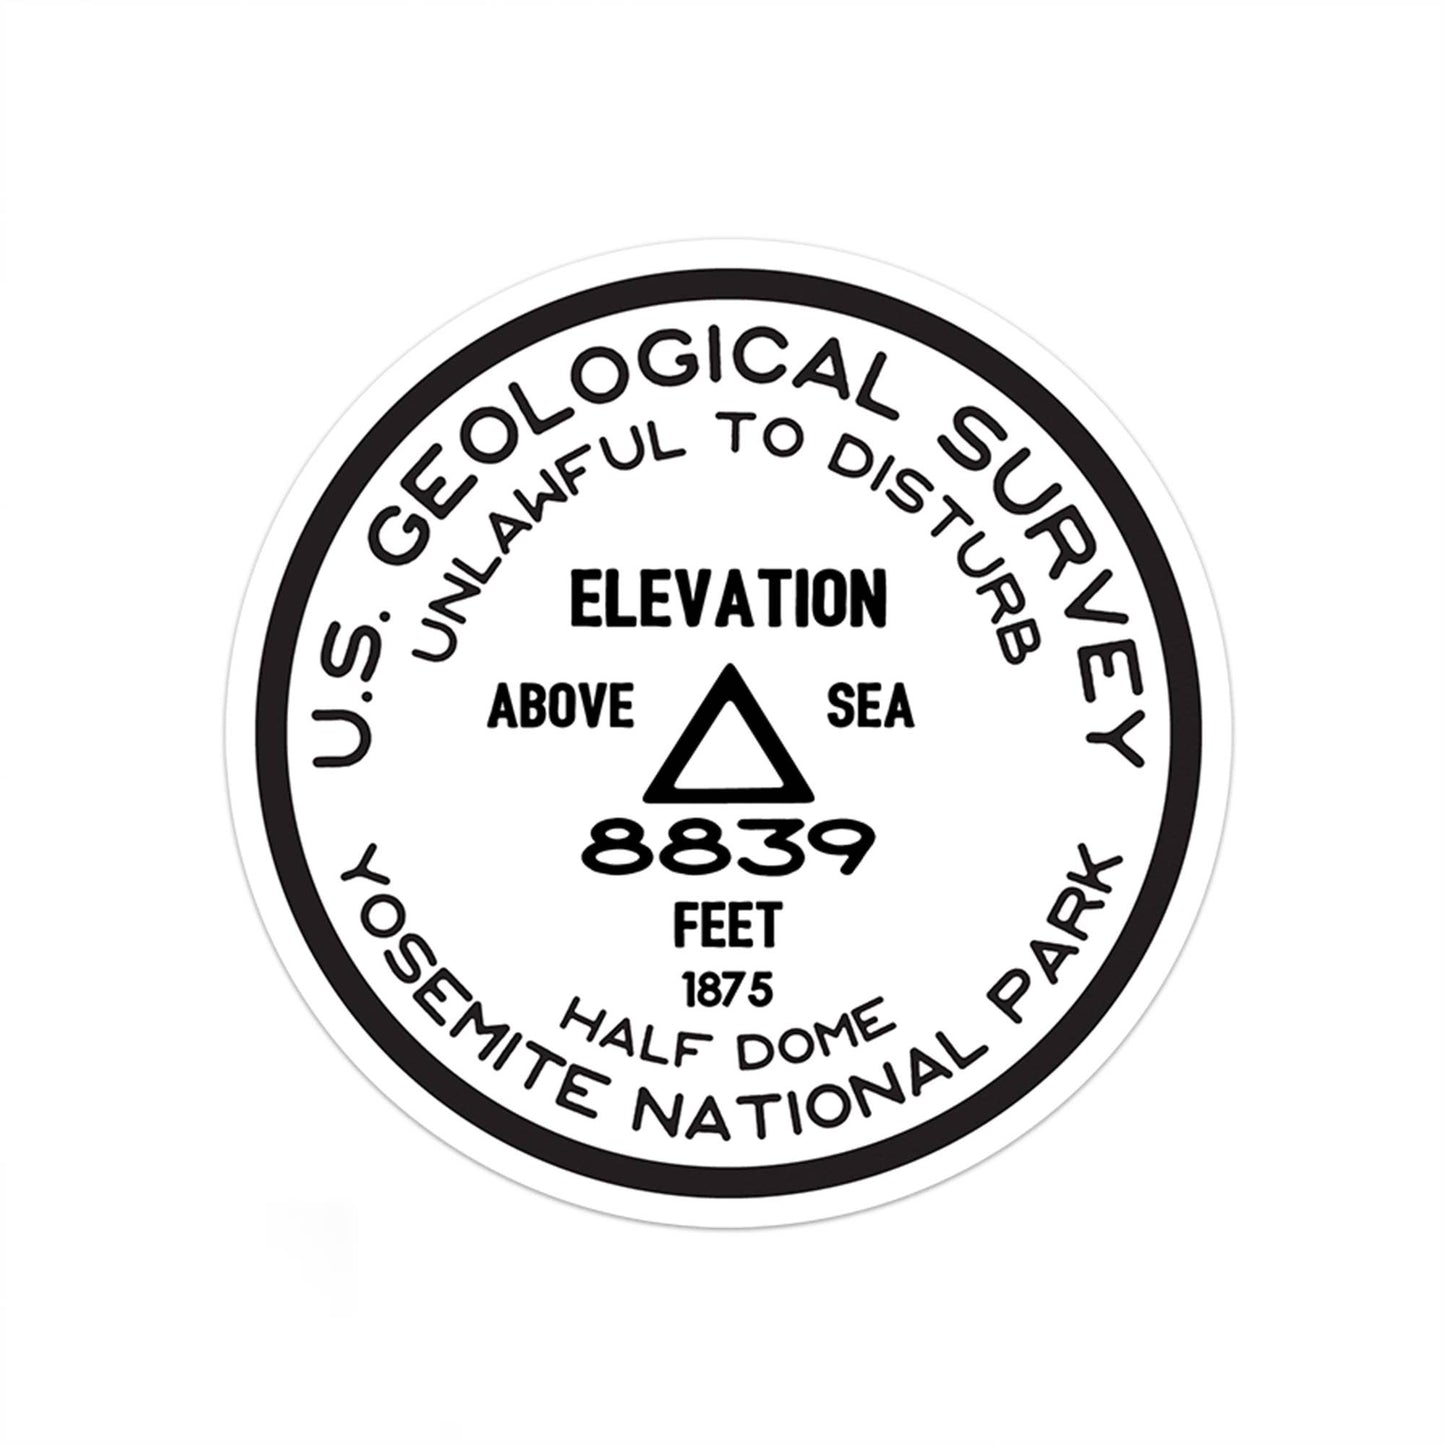 Yosemite National Park USGS Benchmark Sticker | Half Dome: 2"